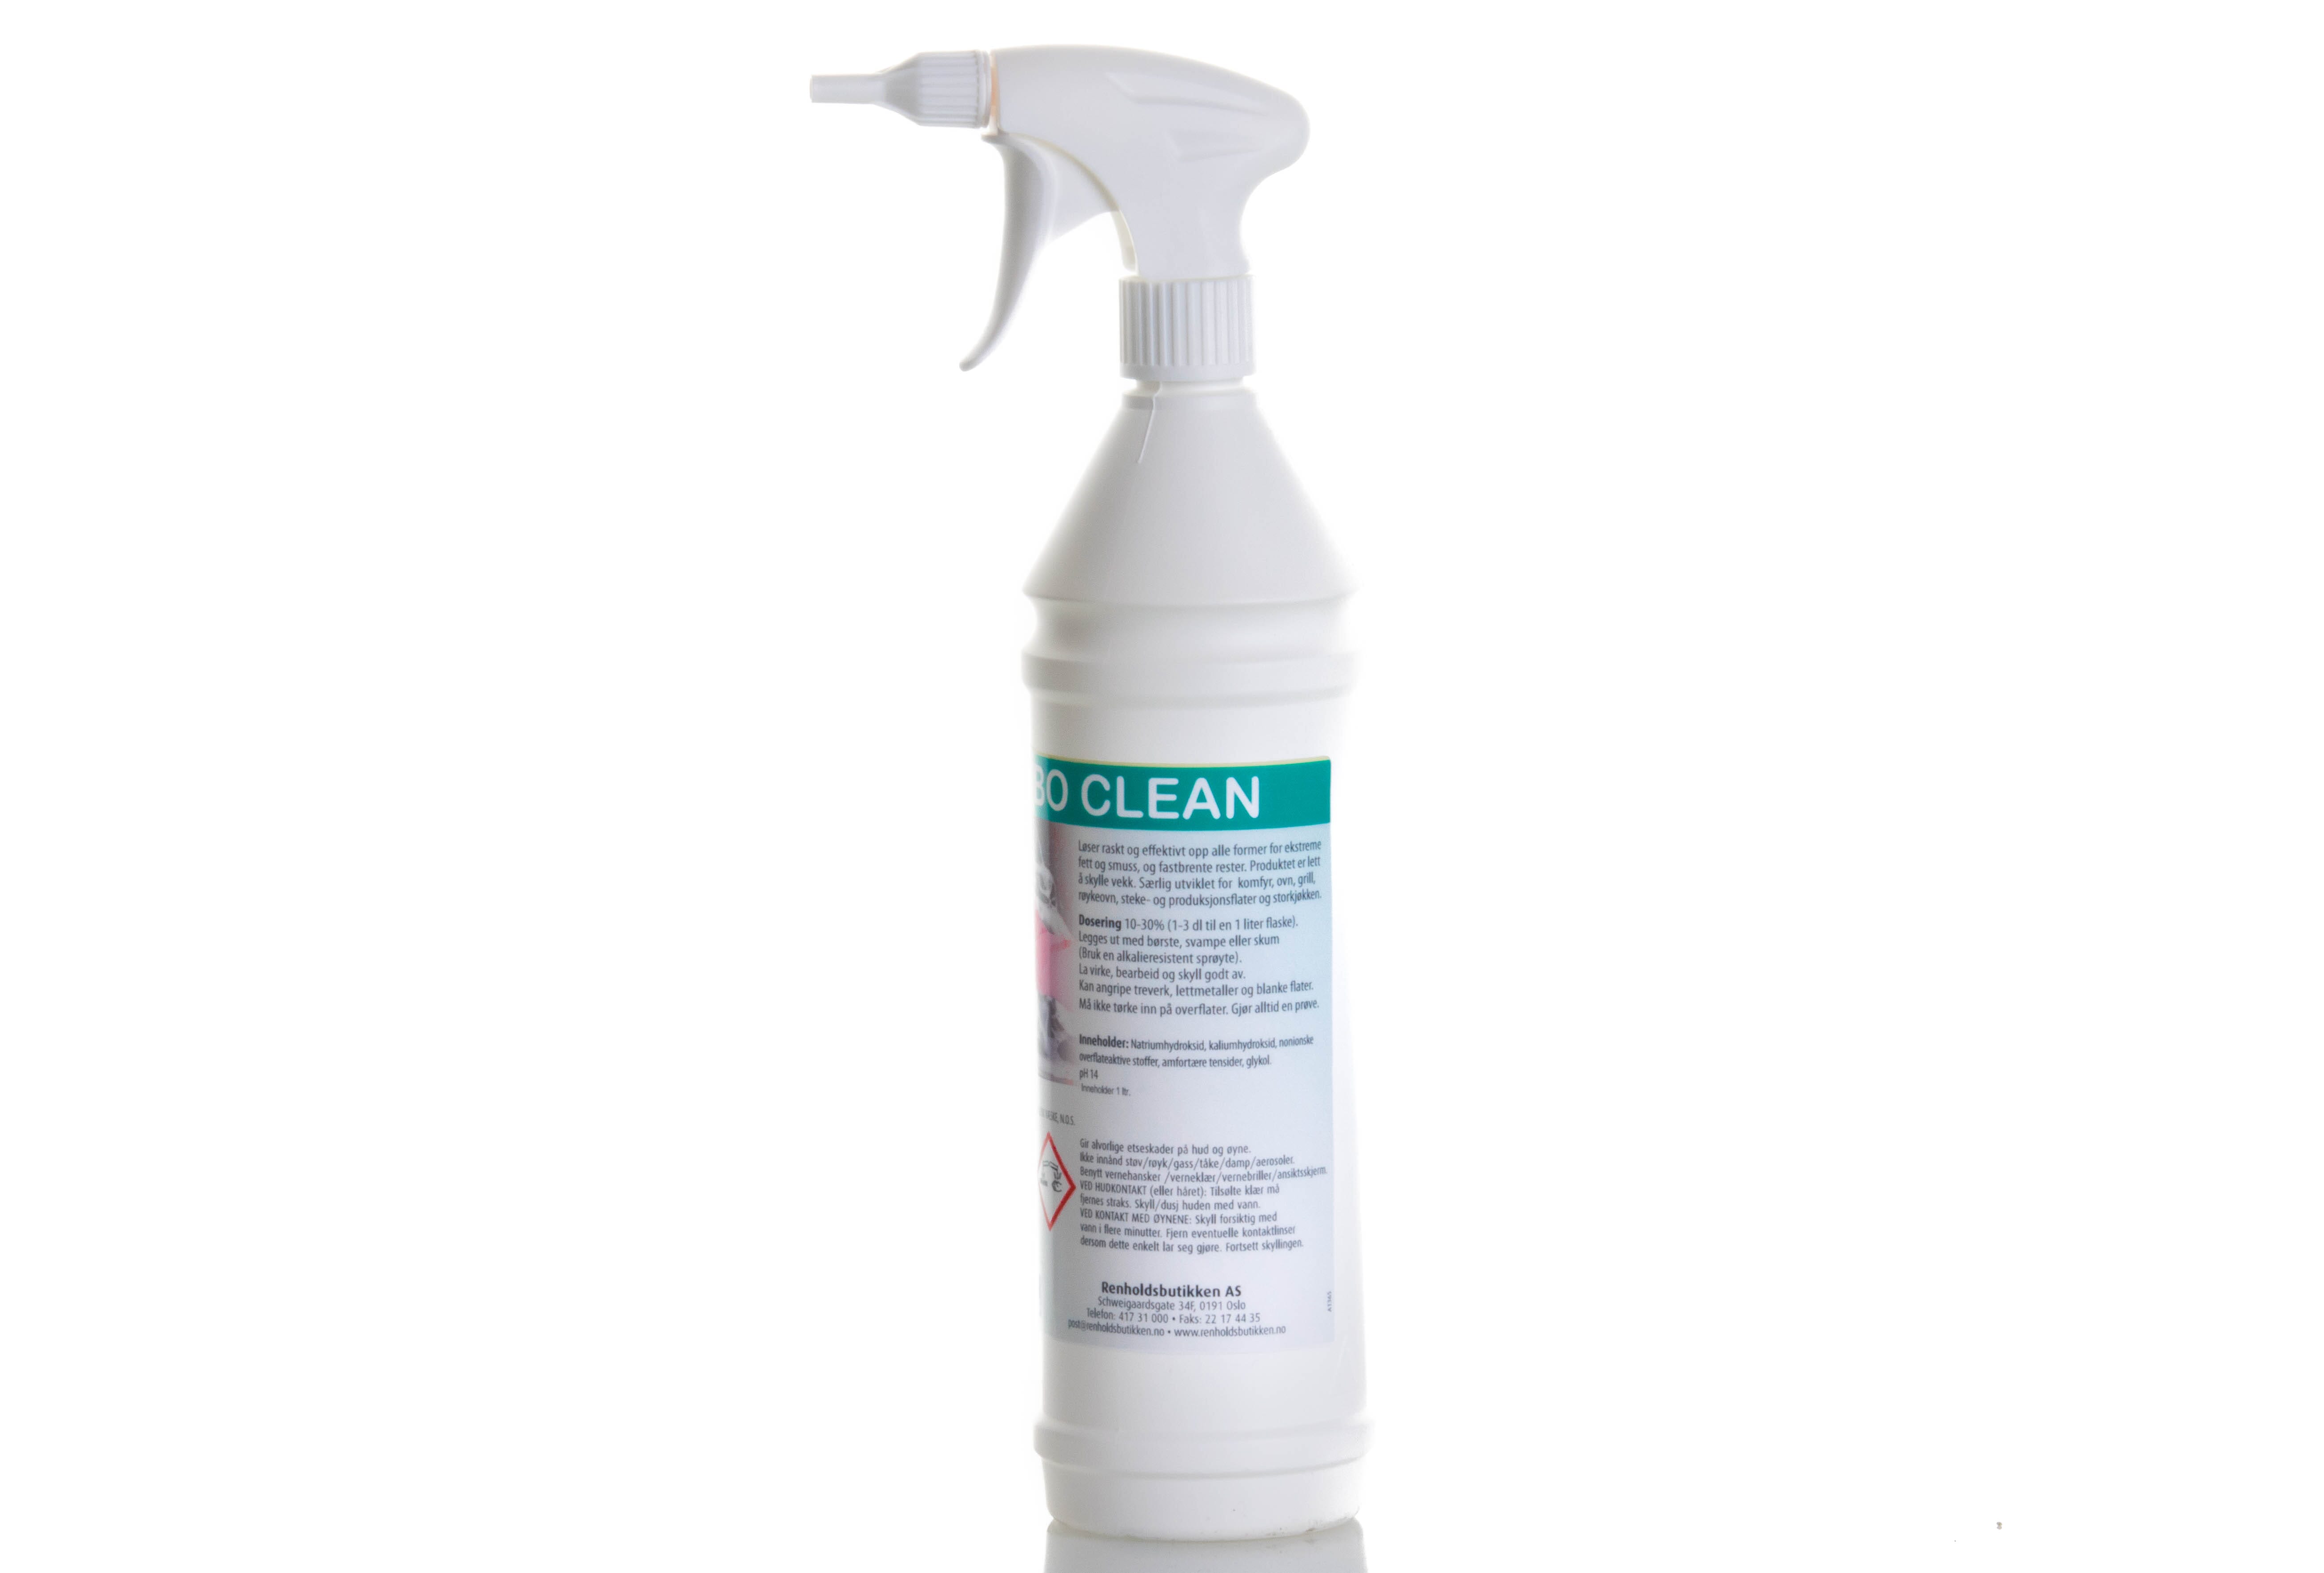 NSP Turbo Clean spray Svanemerket 1 liter - Nordic Supply Partner AS